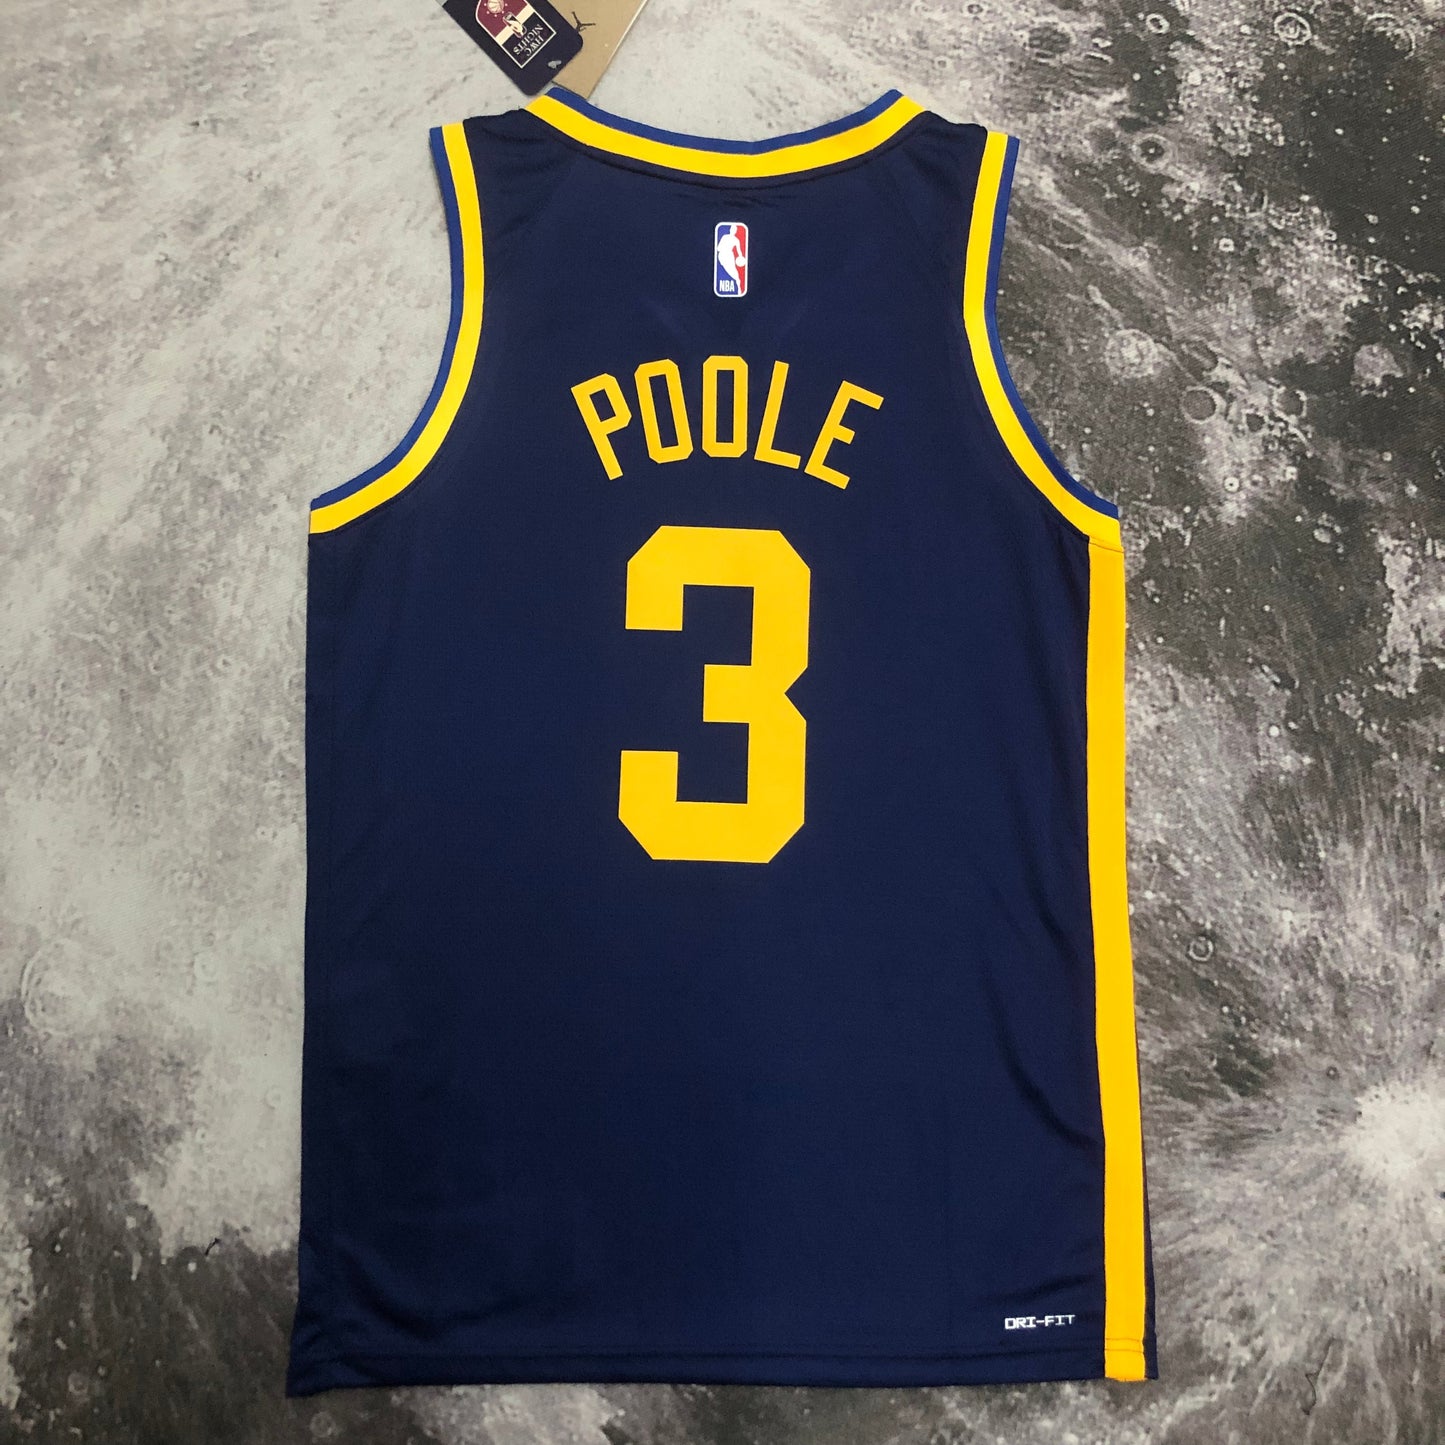 Jordan Poole Michigan Style Golden State Warriors Jordan Brand Navy Swingman Jersey - Statement Edition